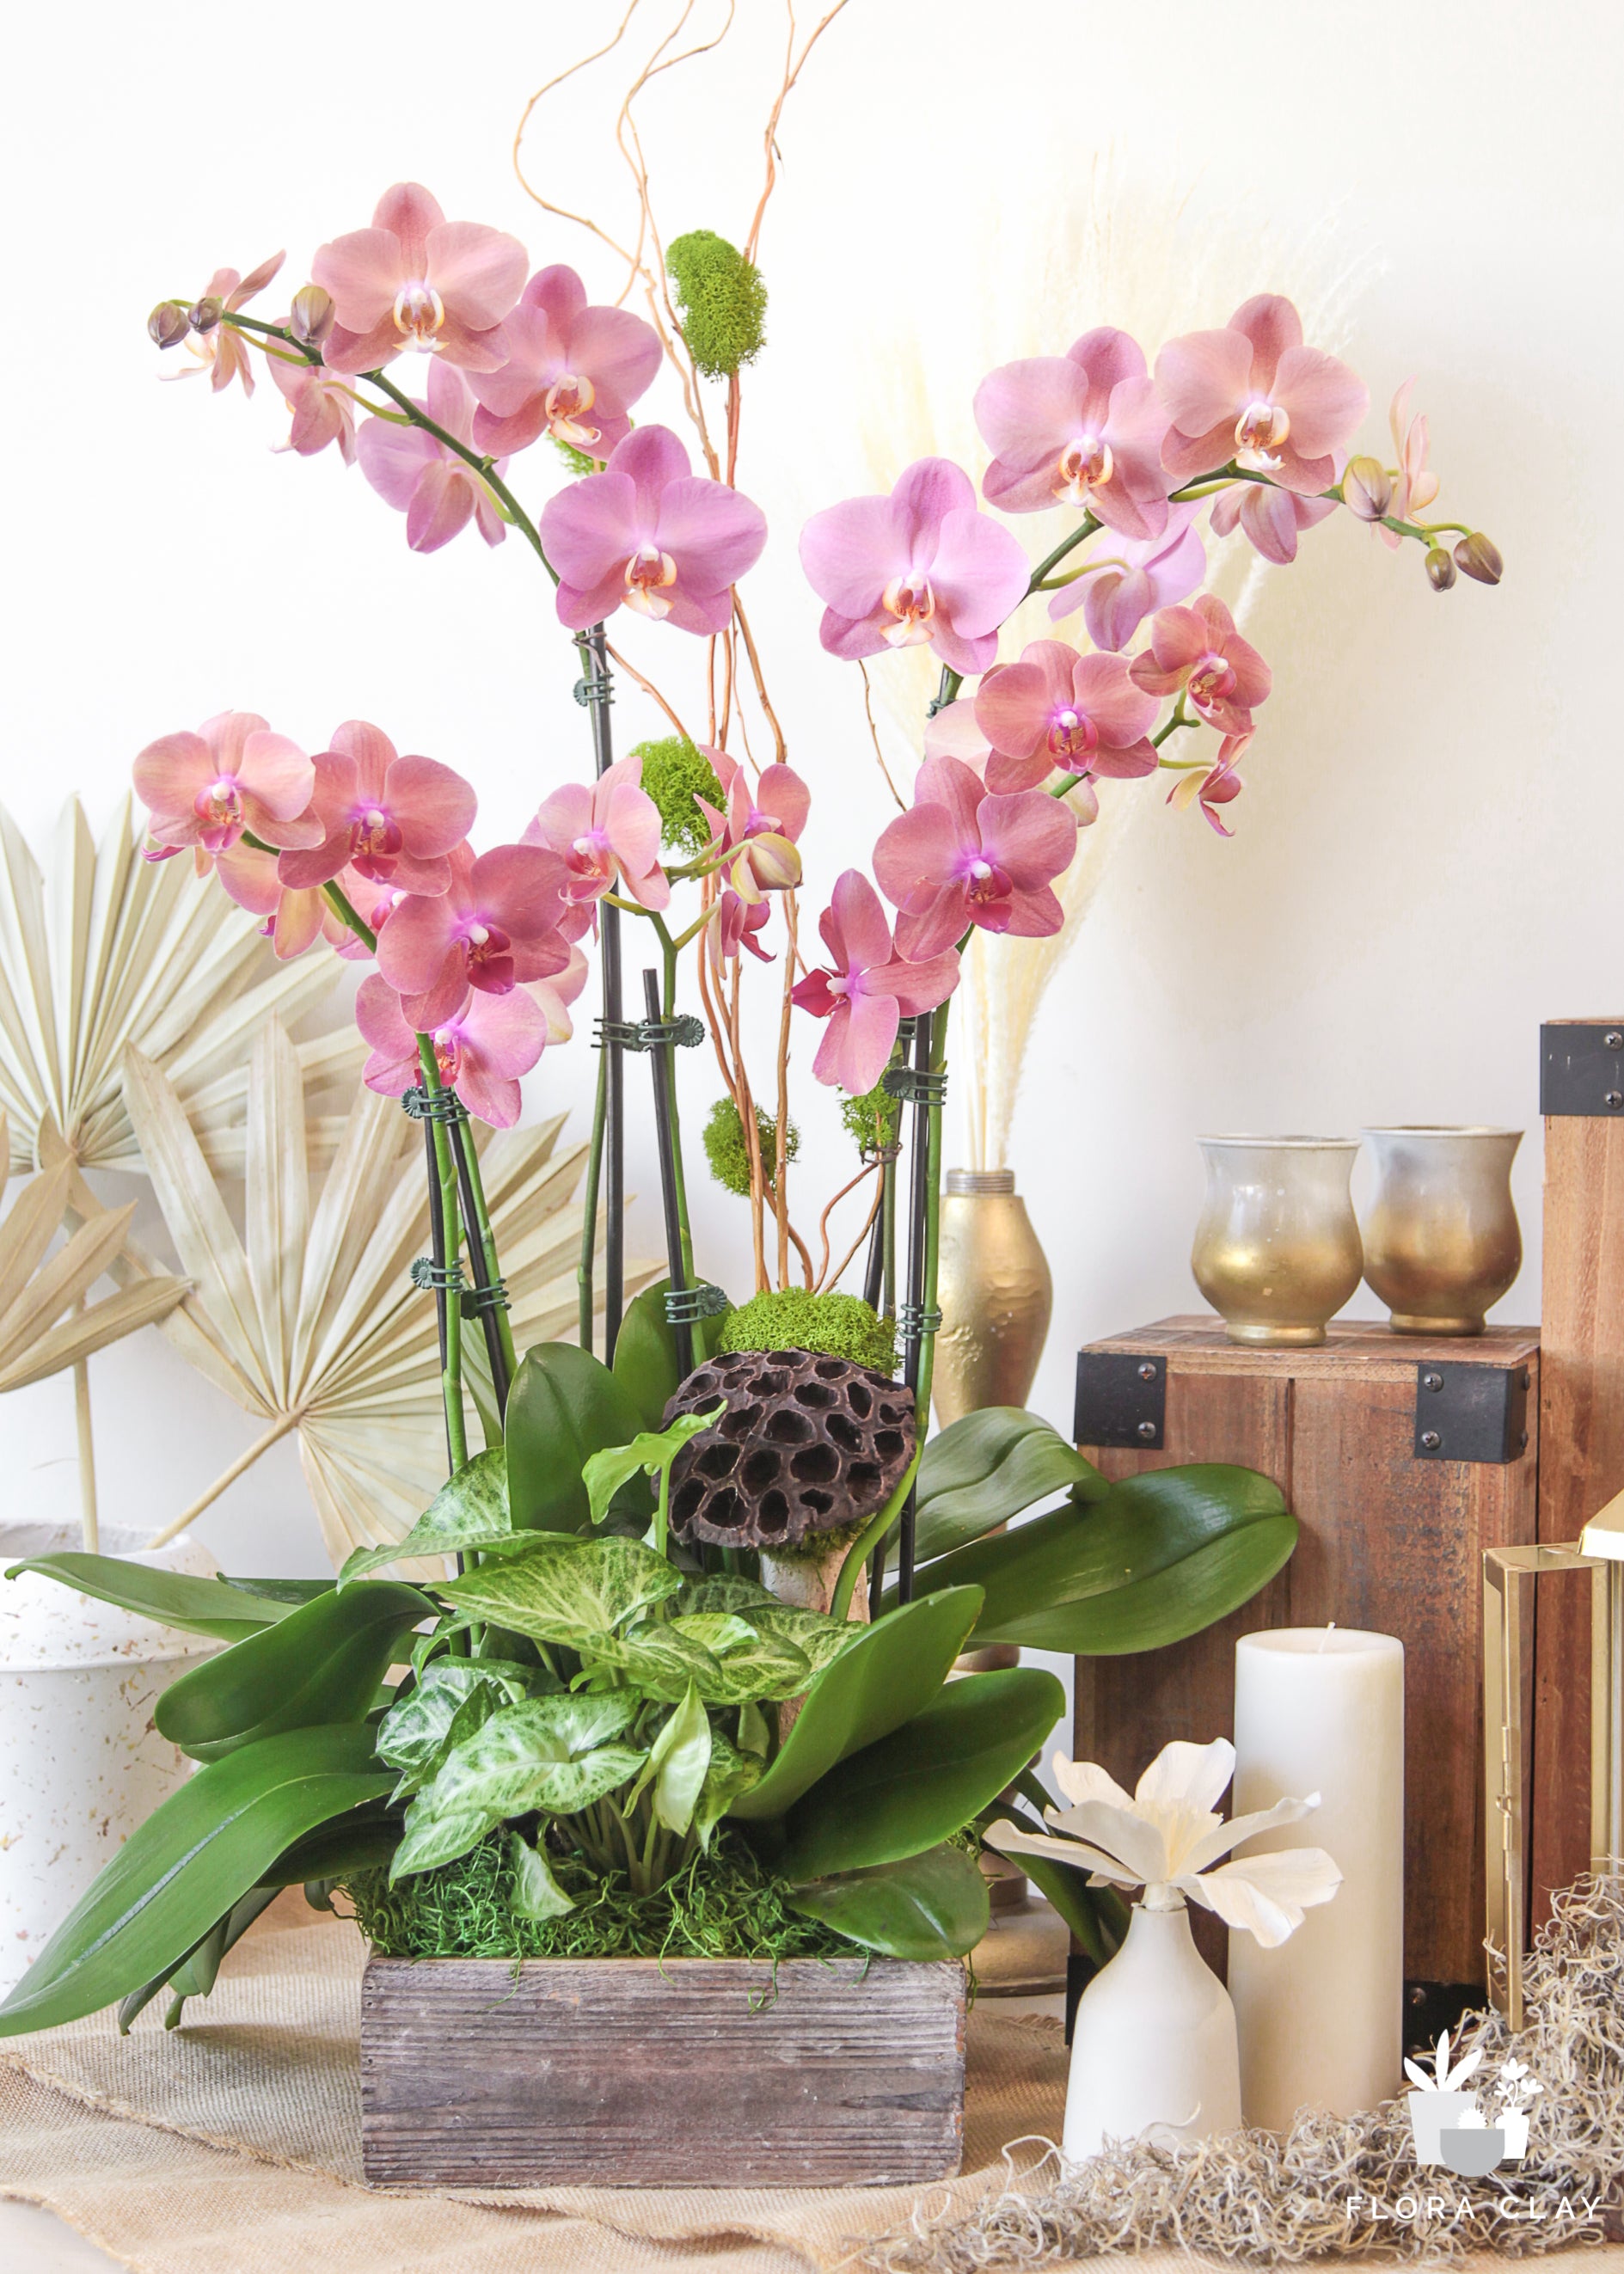 sweater-weather-orchid-arrangement-floraclay-2.jpg